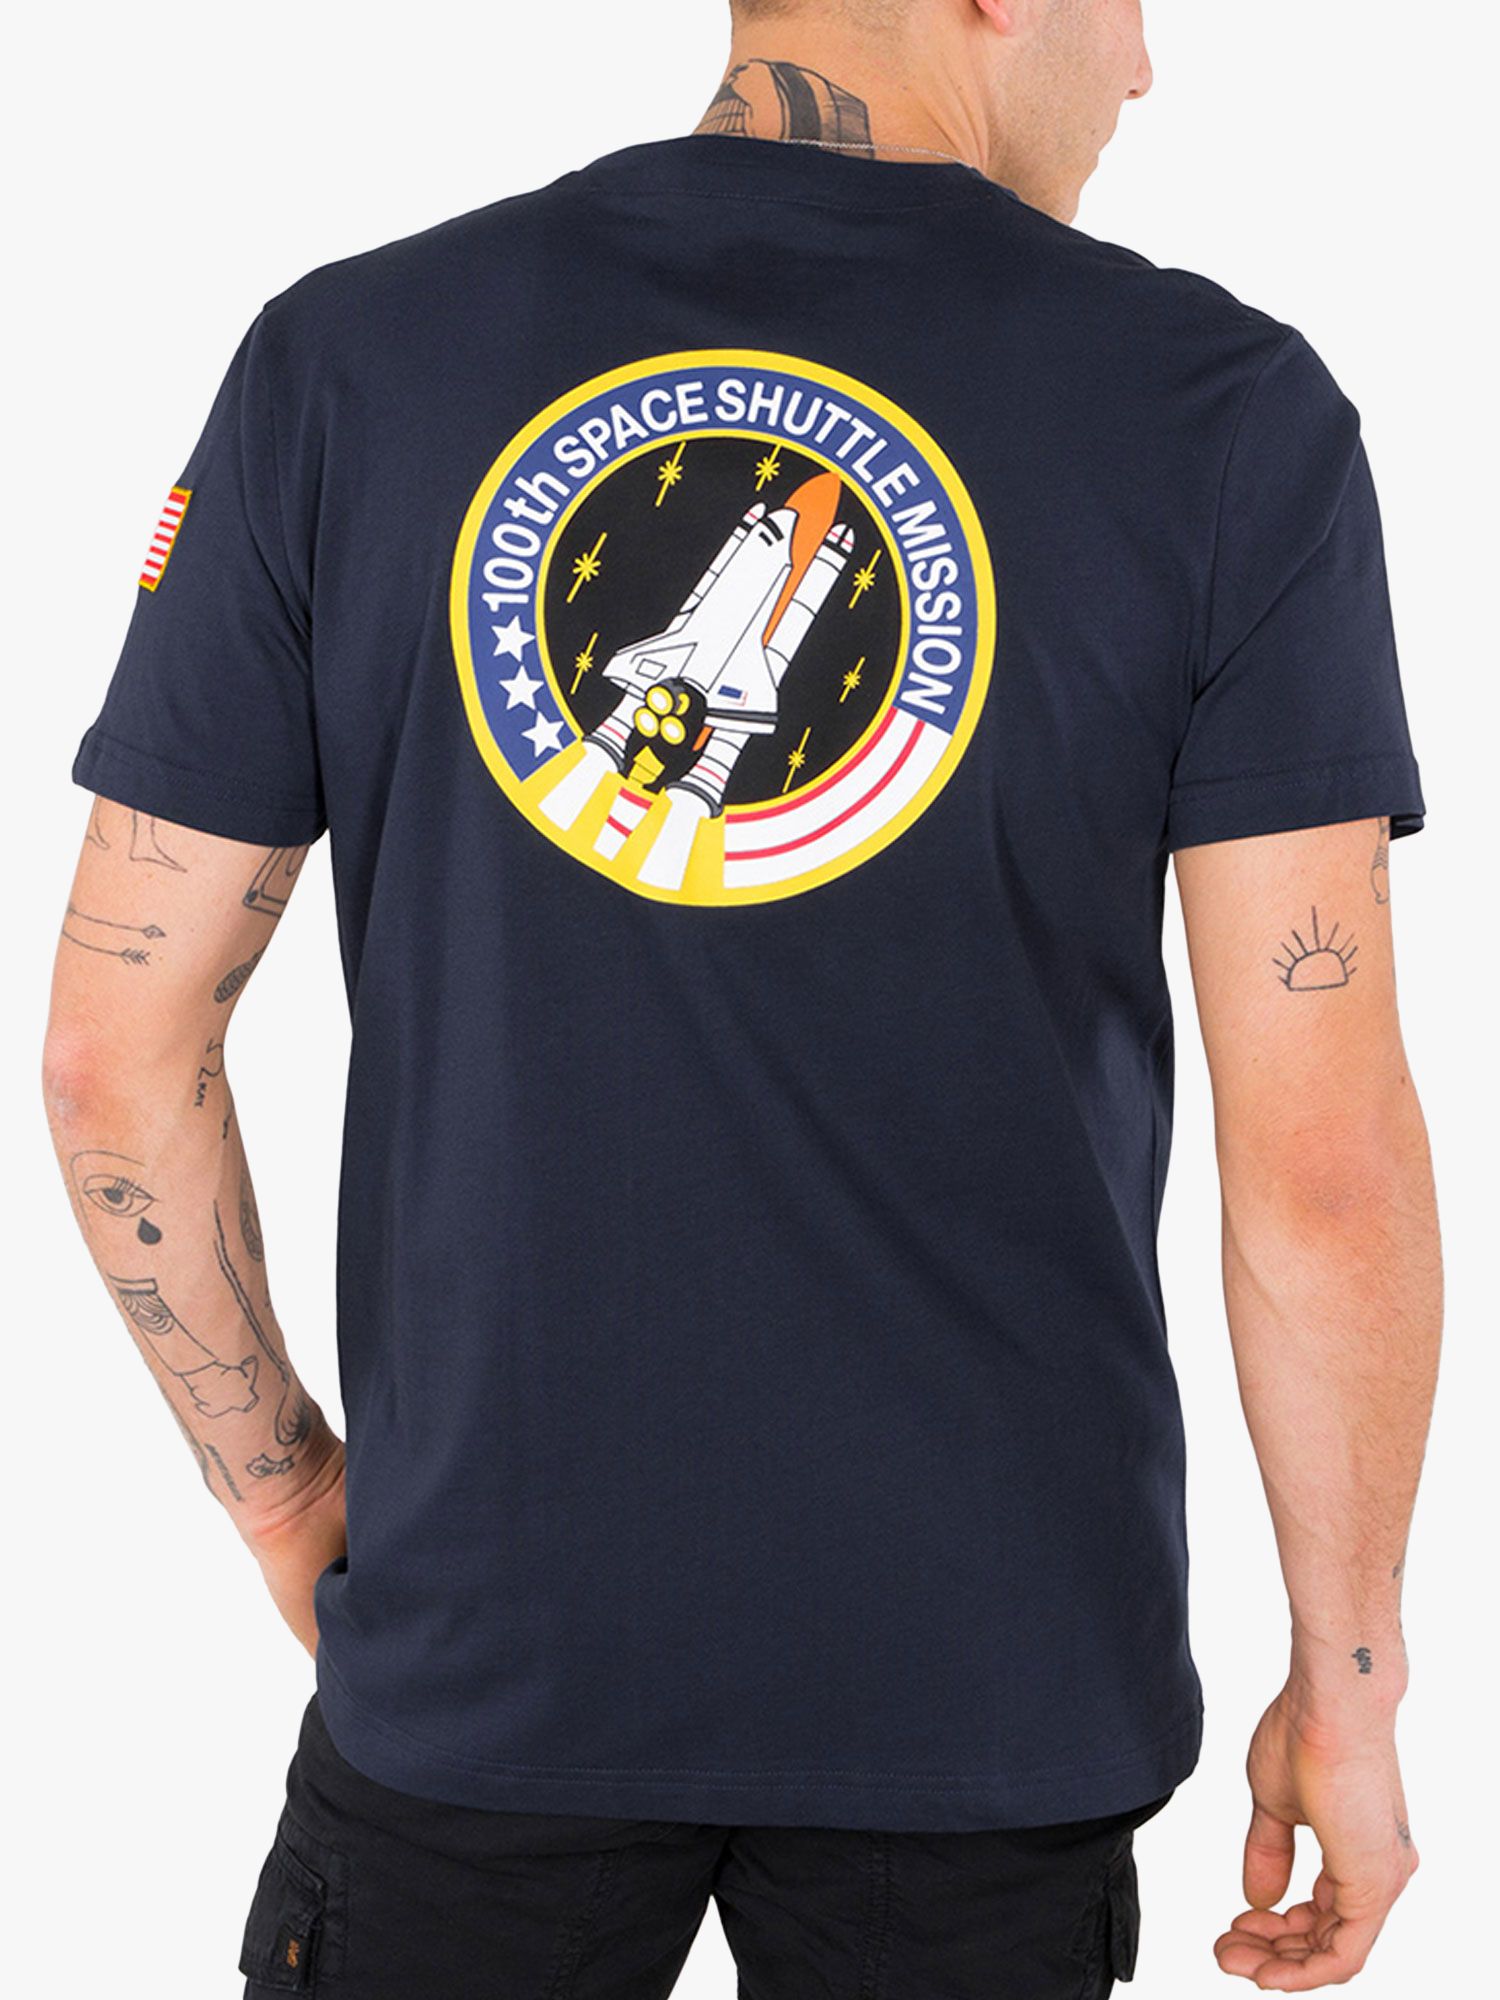 Alpha Industries X NASA Space Shuttle Logo T-Shirt, Navy, S